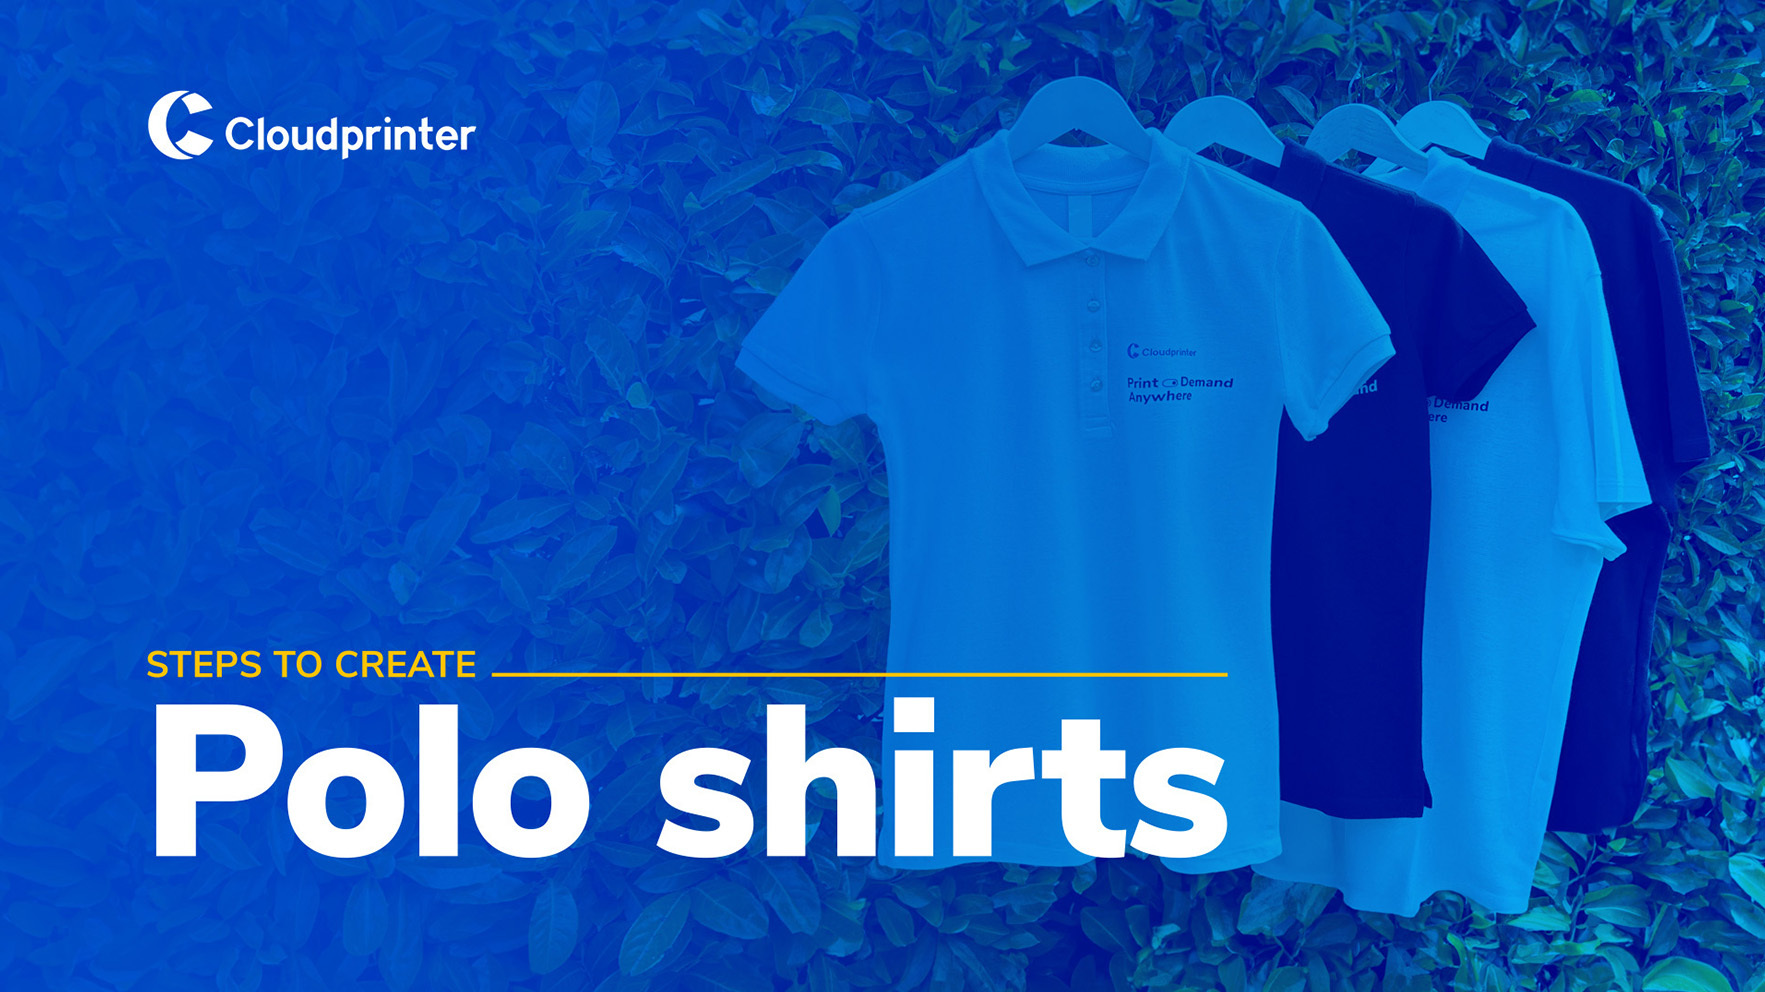 Print polo shirts with Cloudprinter.com